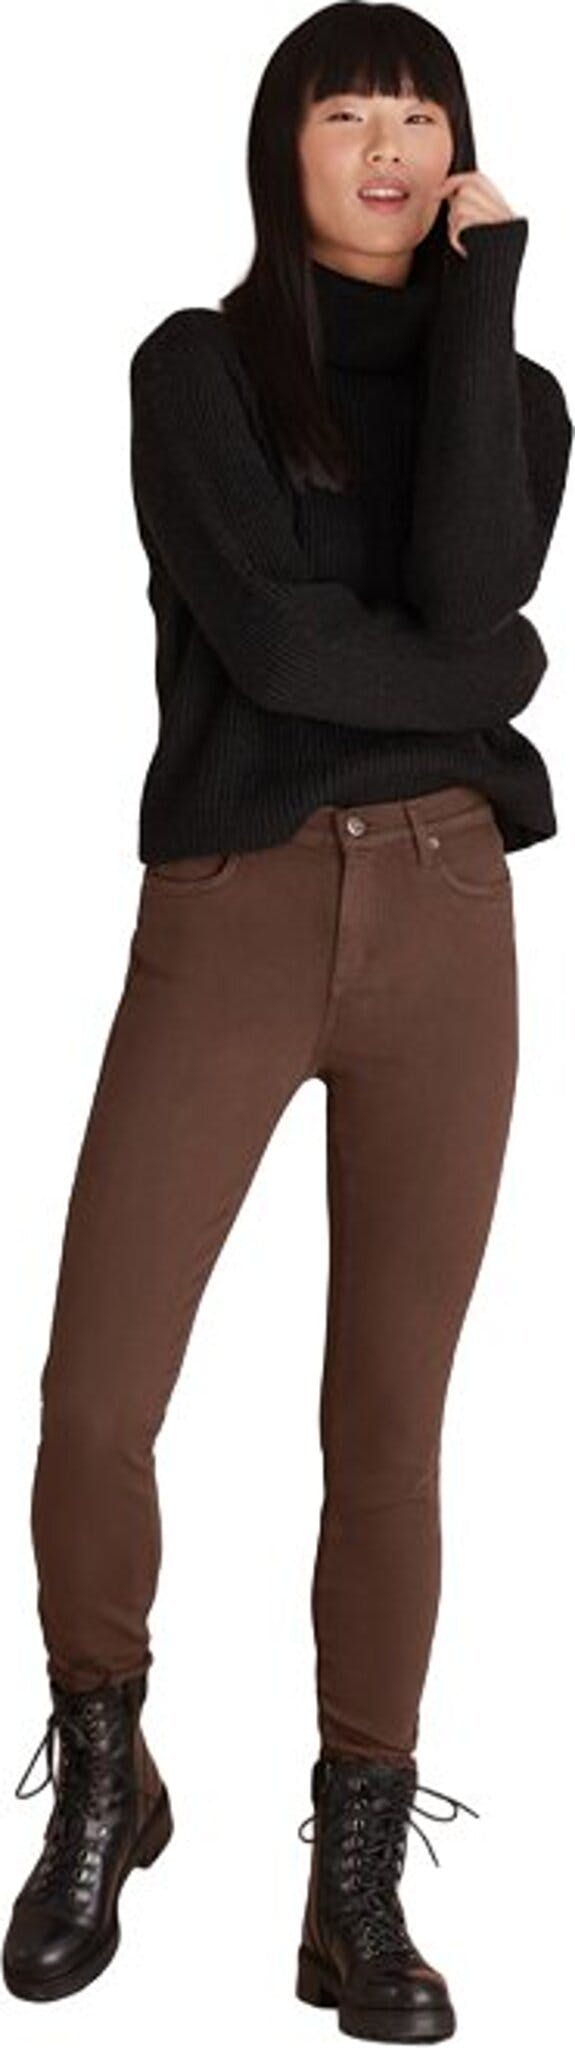 Product image for Rachel Skinny Jeans - Women's